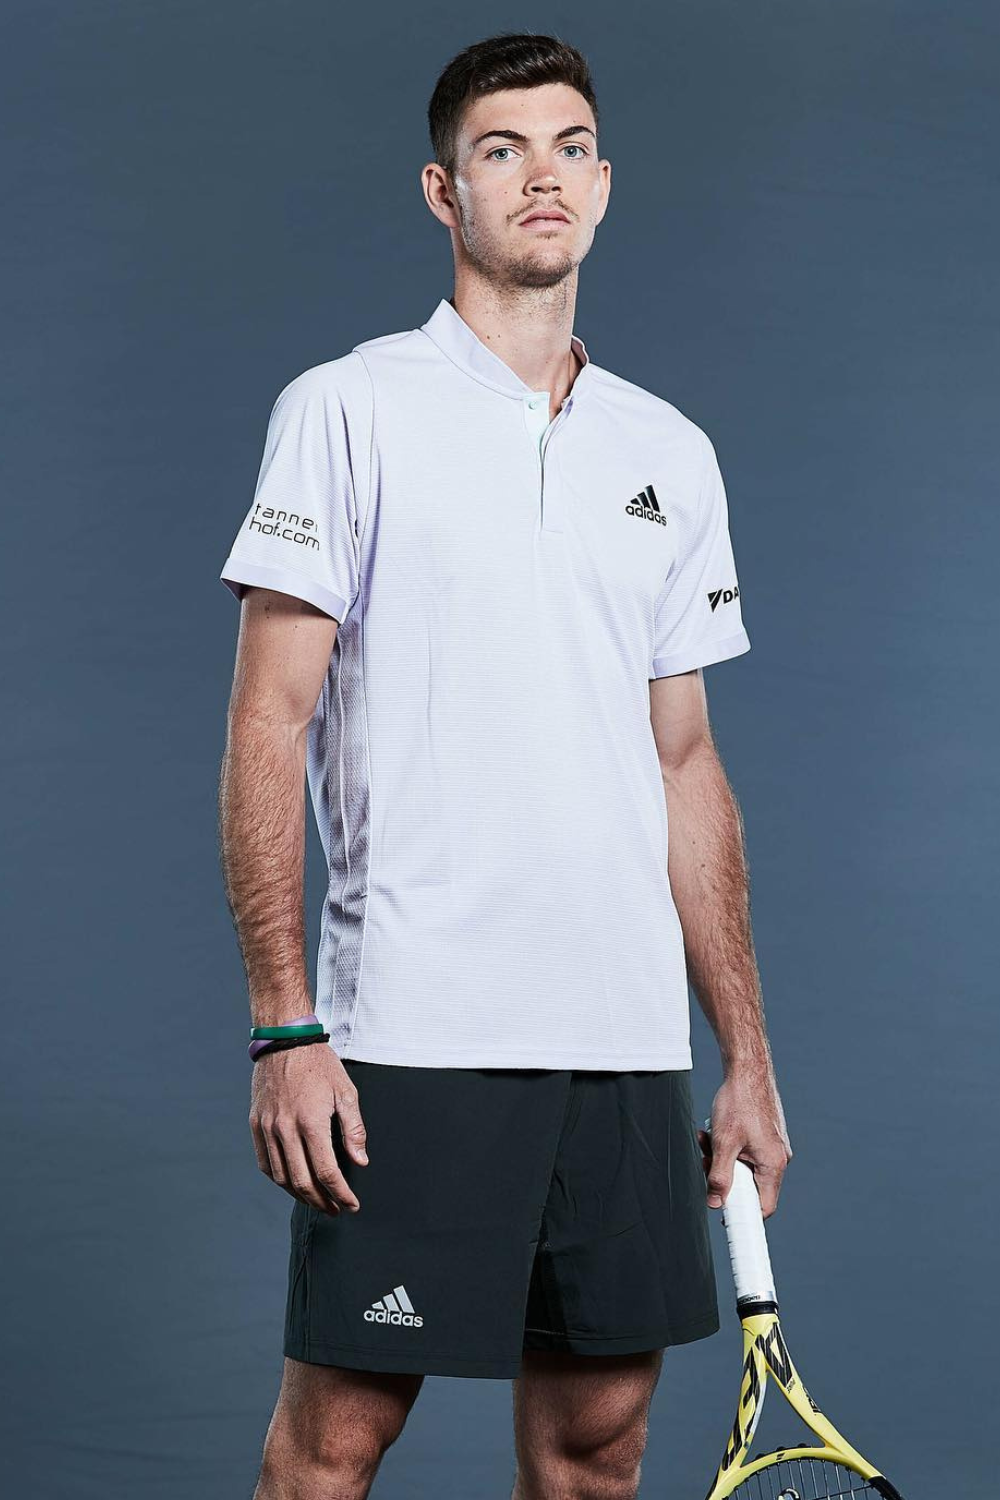 Maximilian Marterer, A Professional Tennis Player